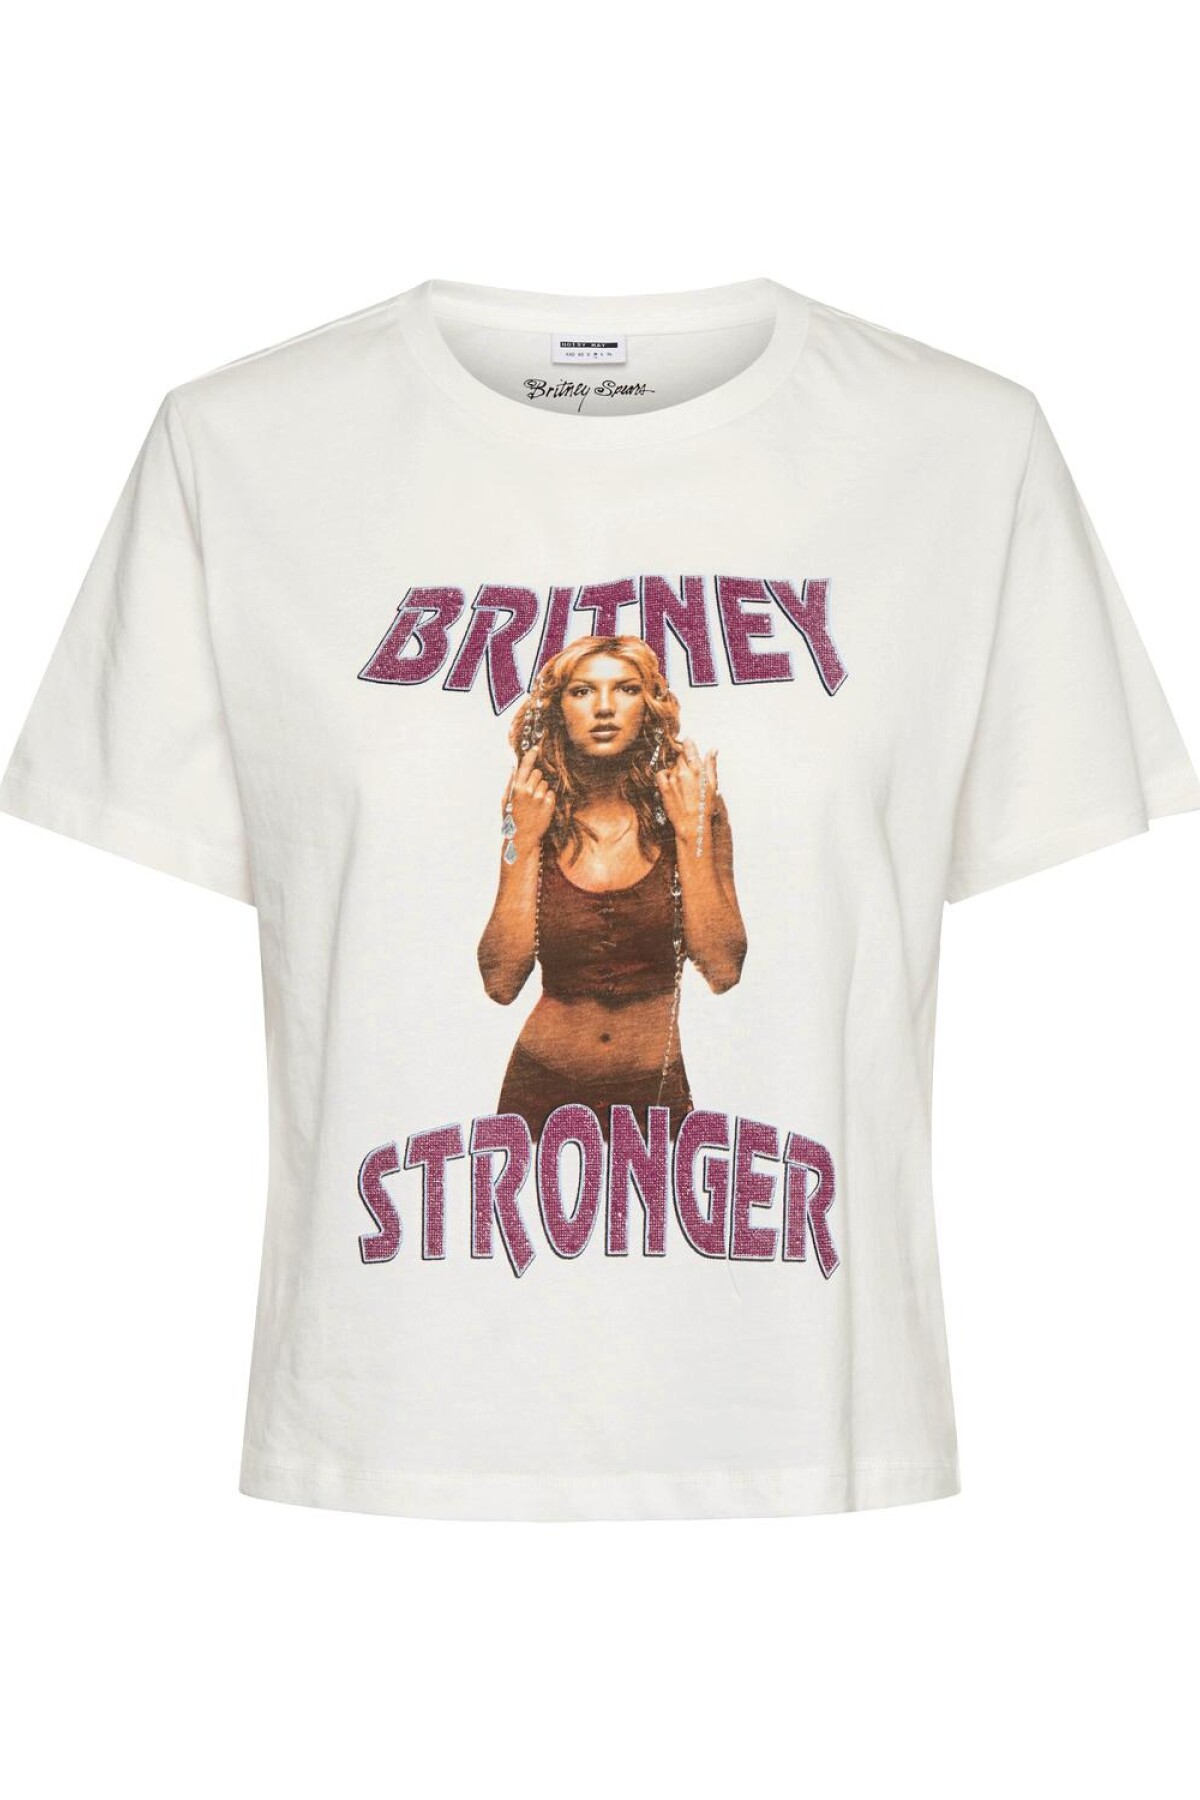 Camiseta De Britney Snow White